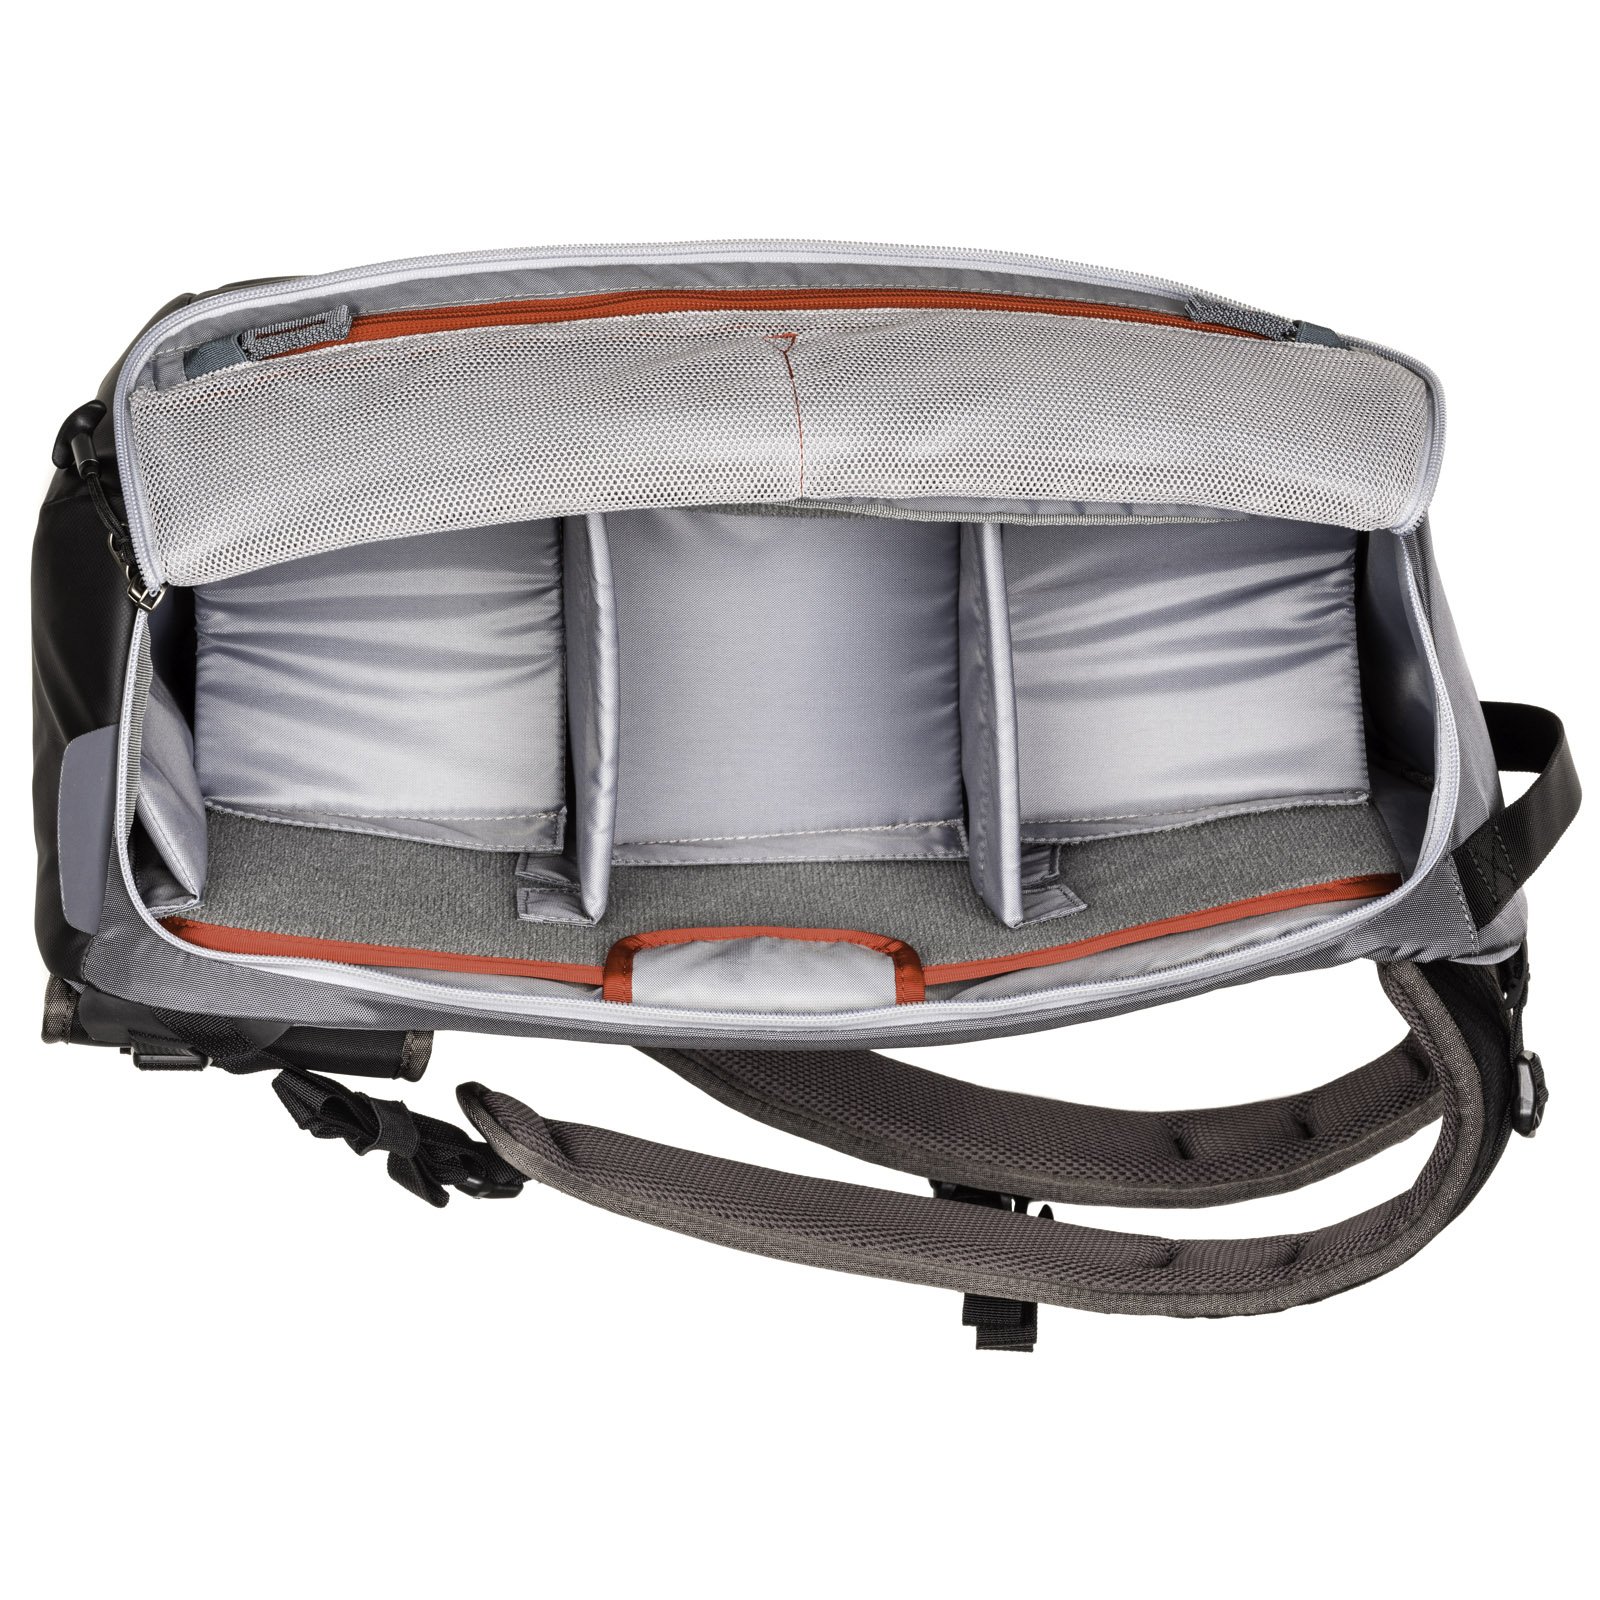 MindShift Gear PhotoCross 15 Backpack